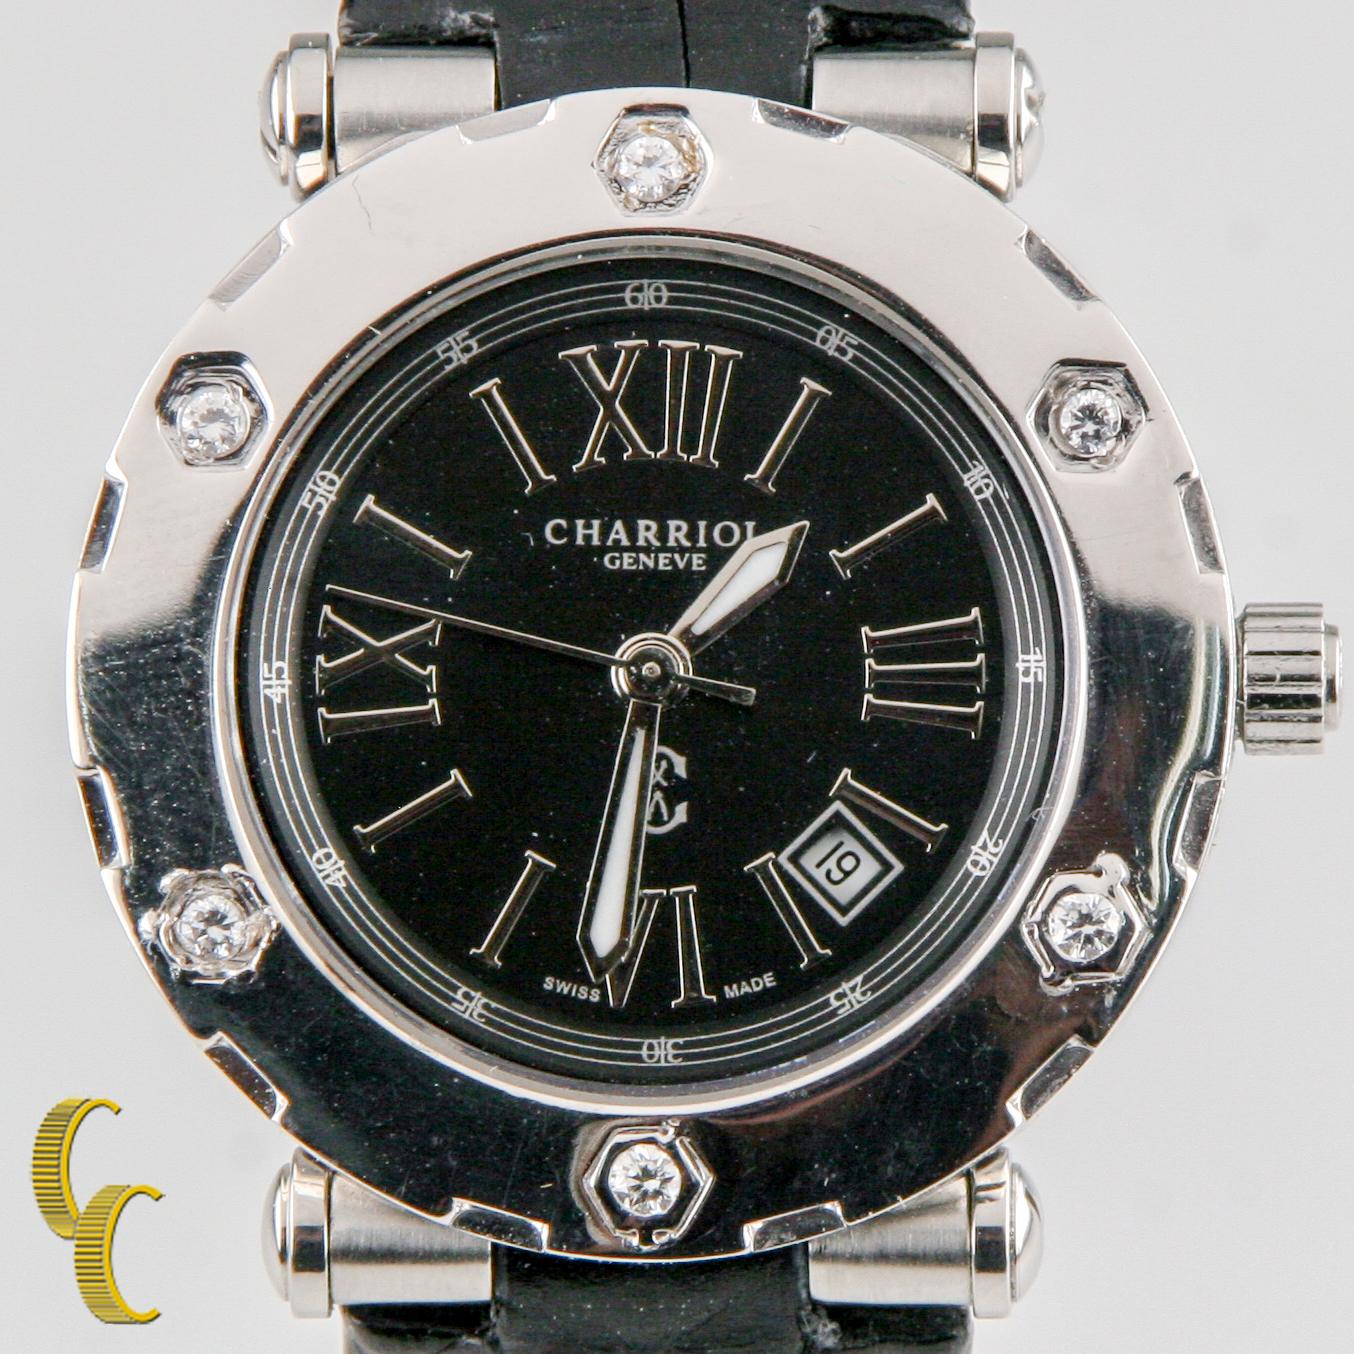 Charriol Stainless Steel Women's Colvmbvs Quartz Watch w/ Diamond Bezel
Model: Colvmbvs
Model #CCR30-1N

Stainless Steel Case w/ Diamond Bezel
29 mm Diameter (32 mm w/ Crown)
Lug-to-Lug Distance = 31 mm
Thickness = 6 mm

Black Dial w/ Silver Roman